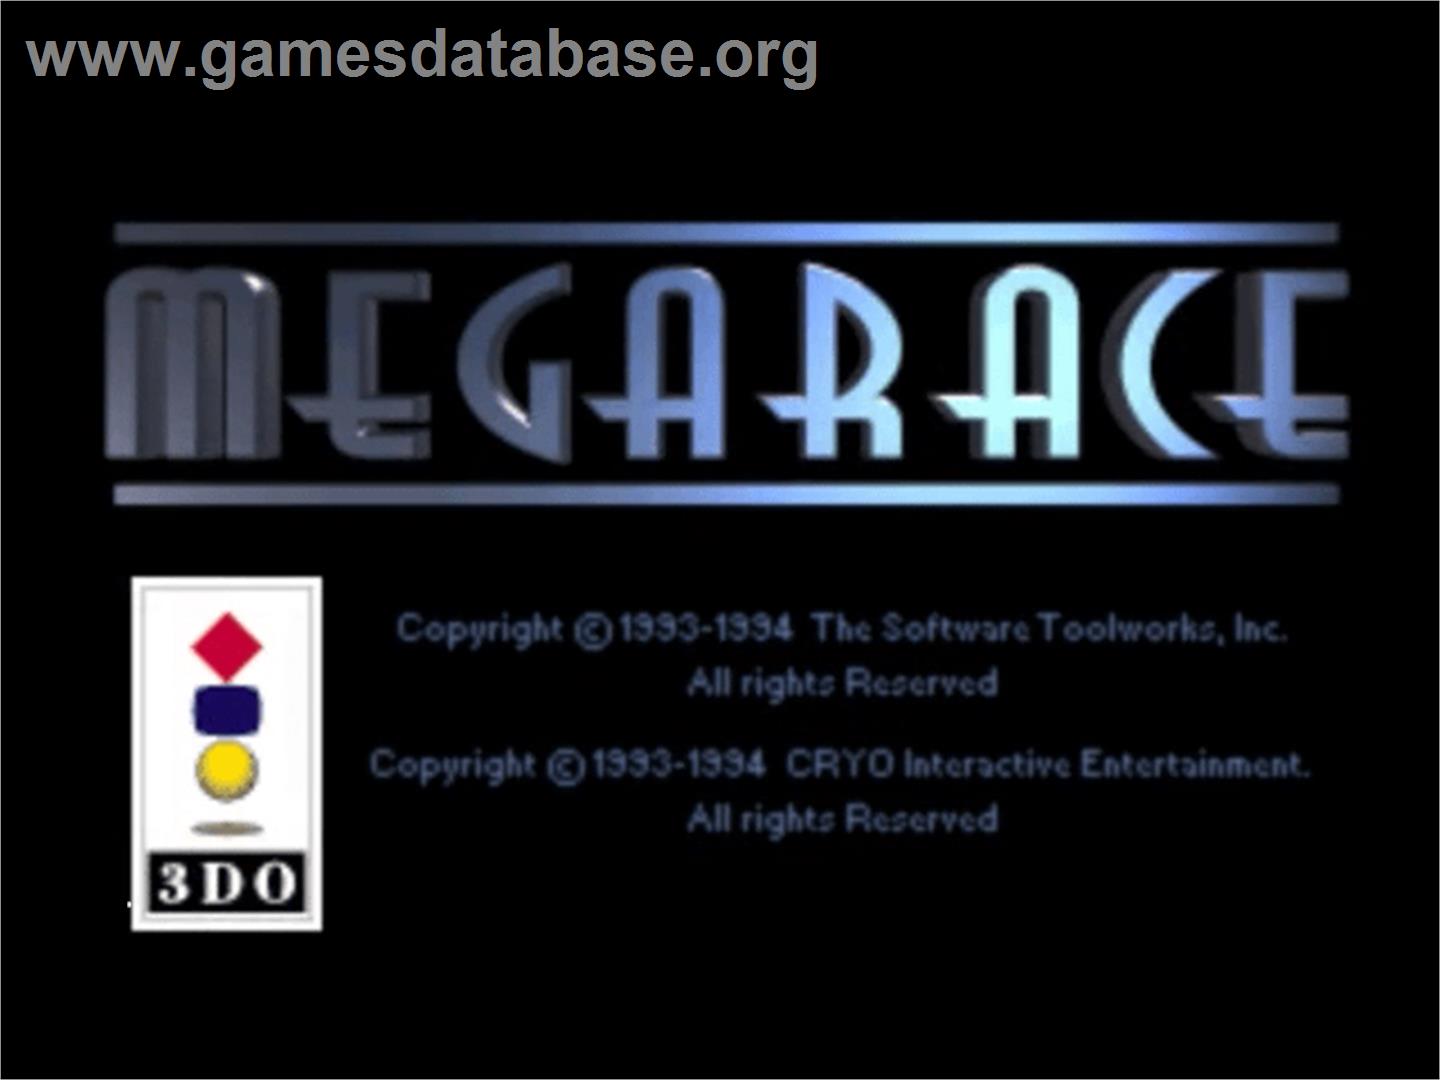 MegaRace - Panasonic 3DO - Artwork - Title Screen